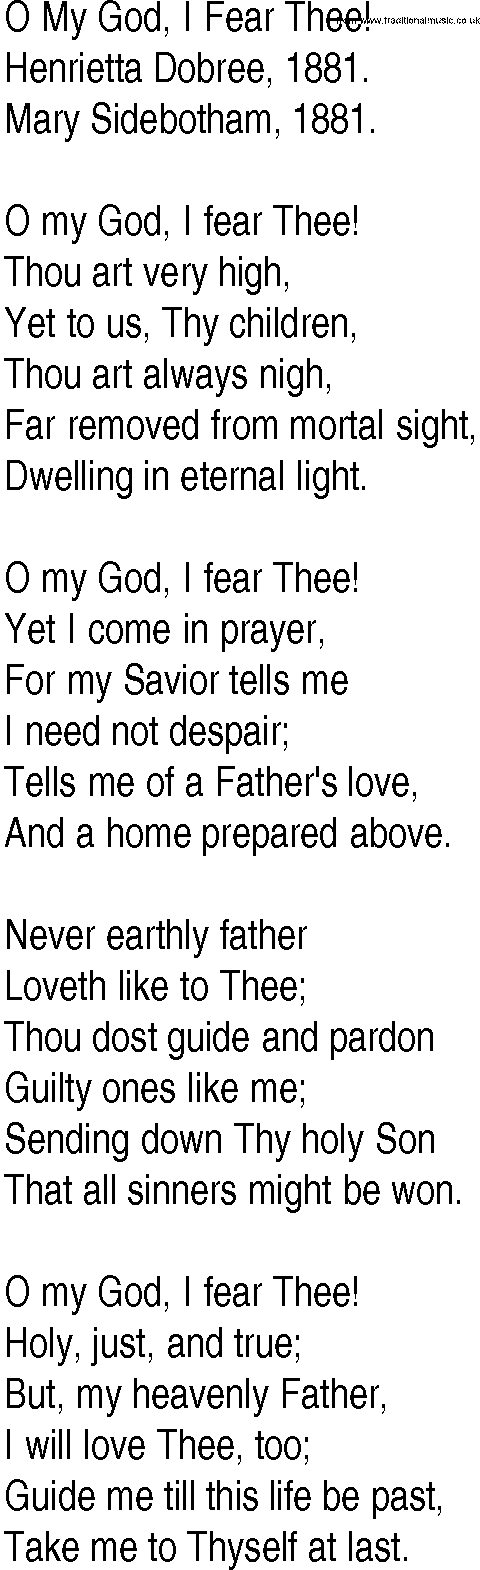 Hymn and Gospel Song: O My God, I Fear Thee! by Henrietta Dobree lyrics